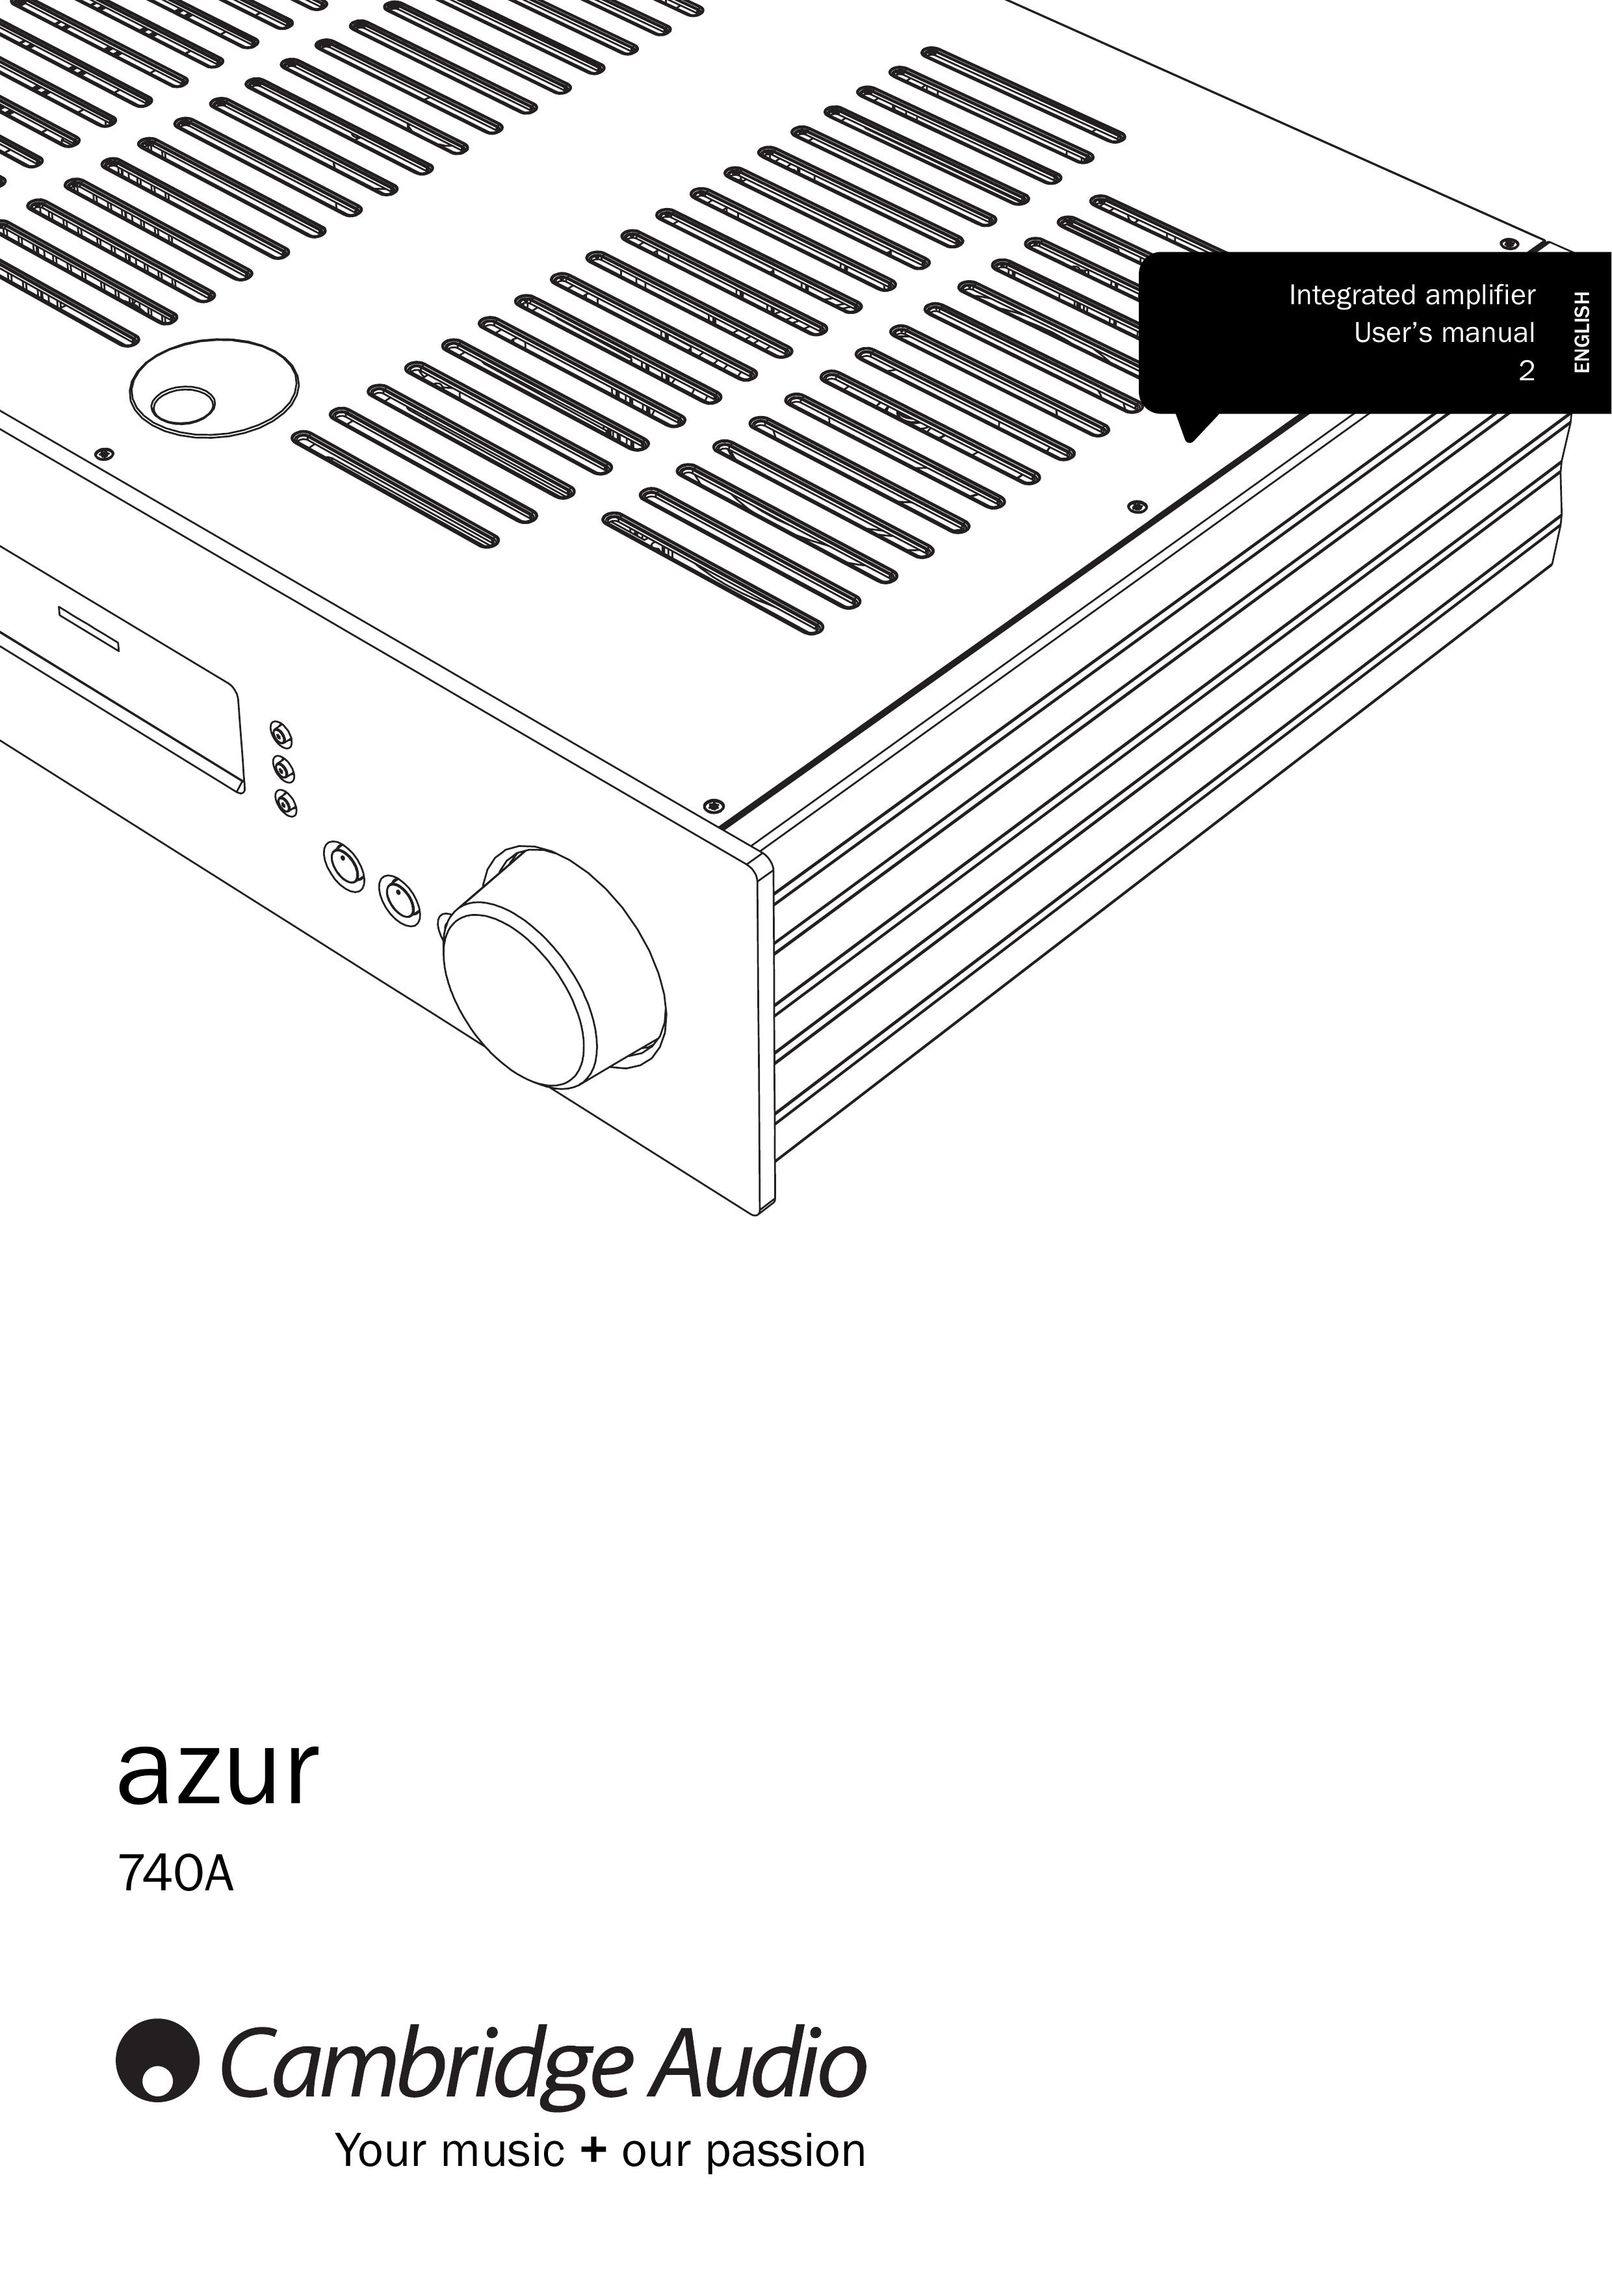 Cambridge Audio Azur 740A Stereo Amplifier User Manual